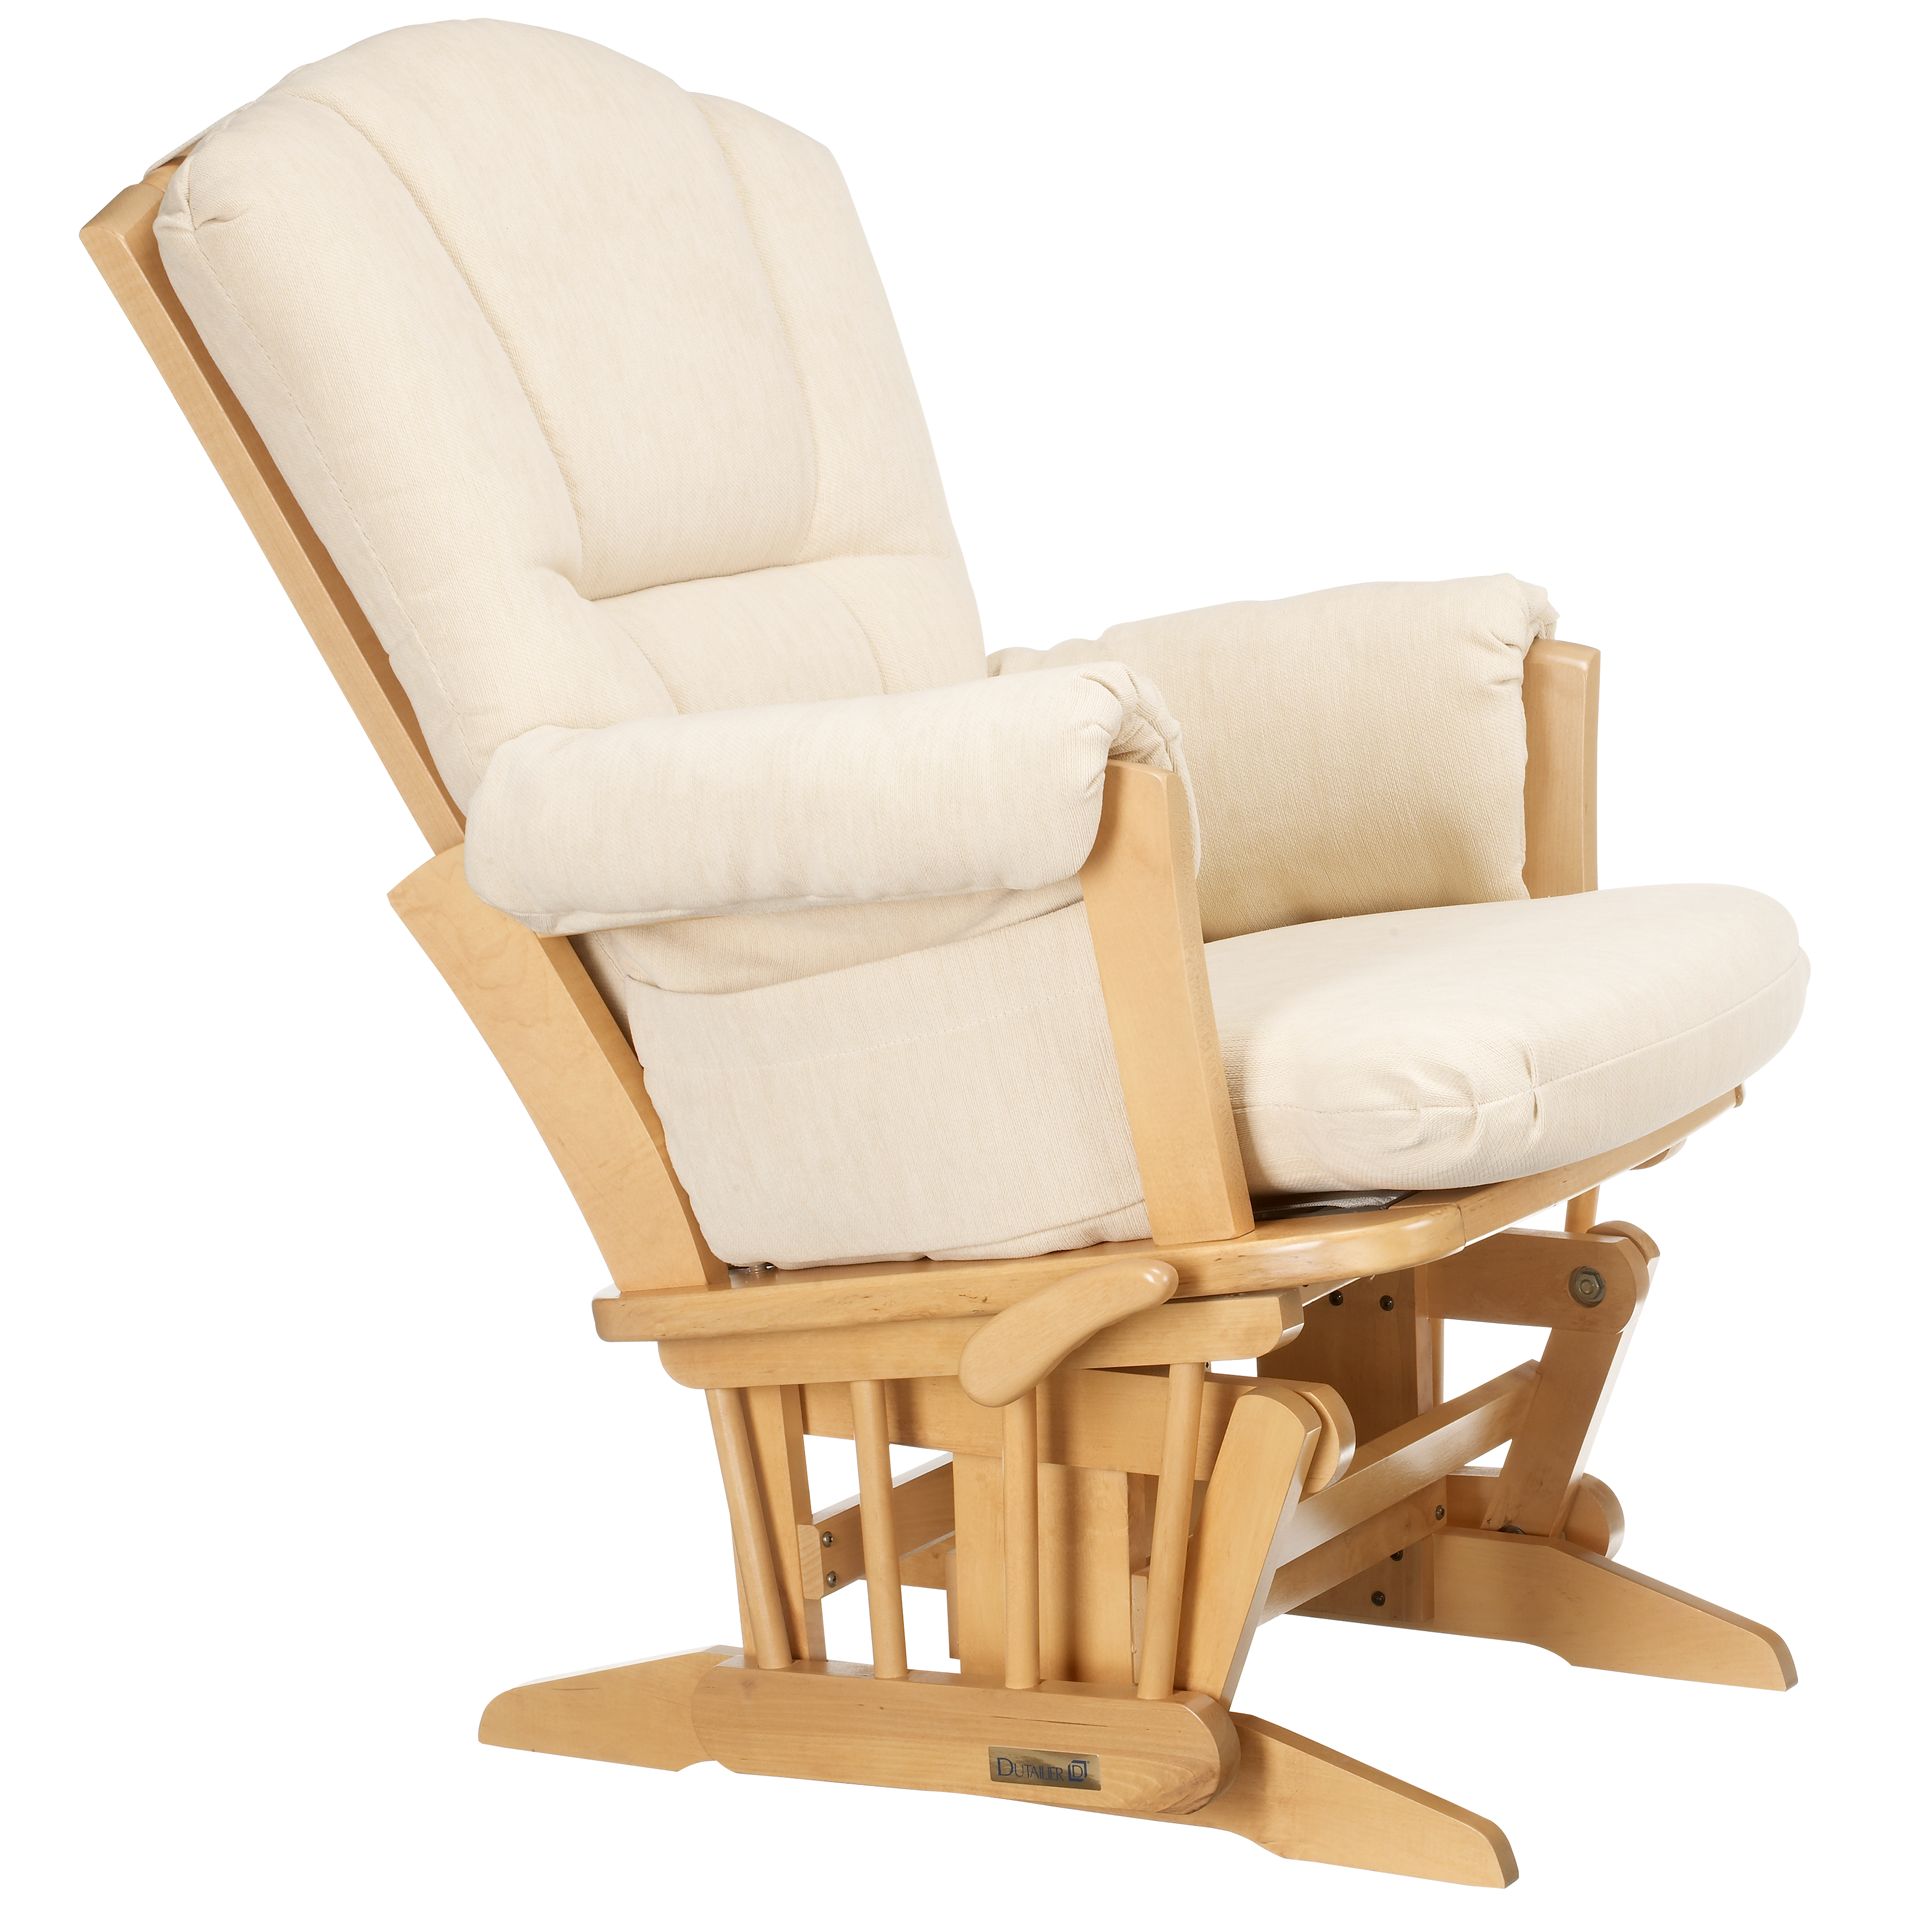 John Lewis Sophie Glider Chair, Soft Beige/Natural